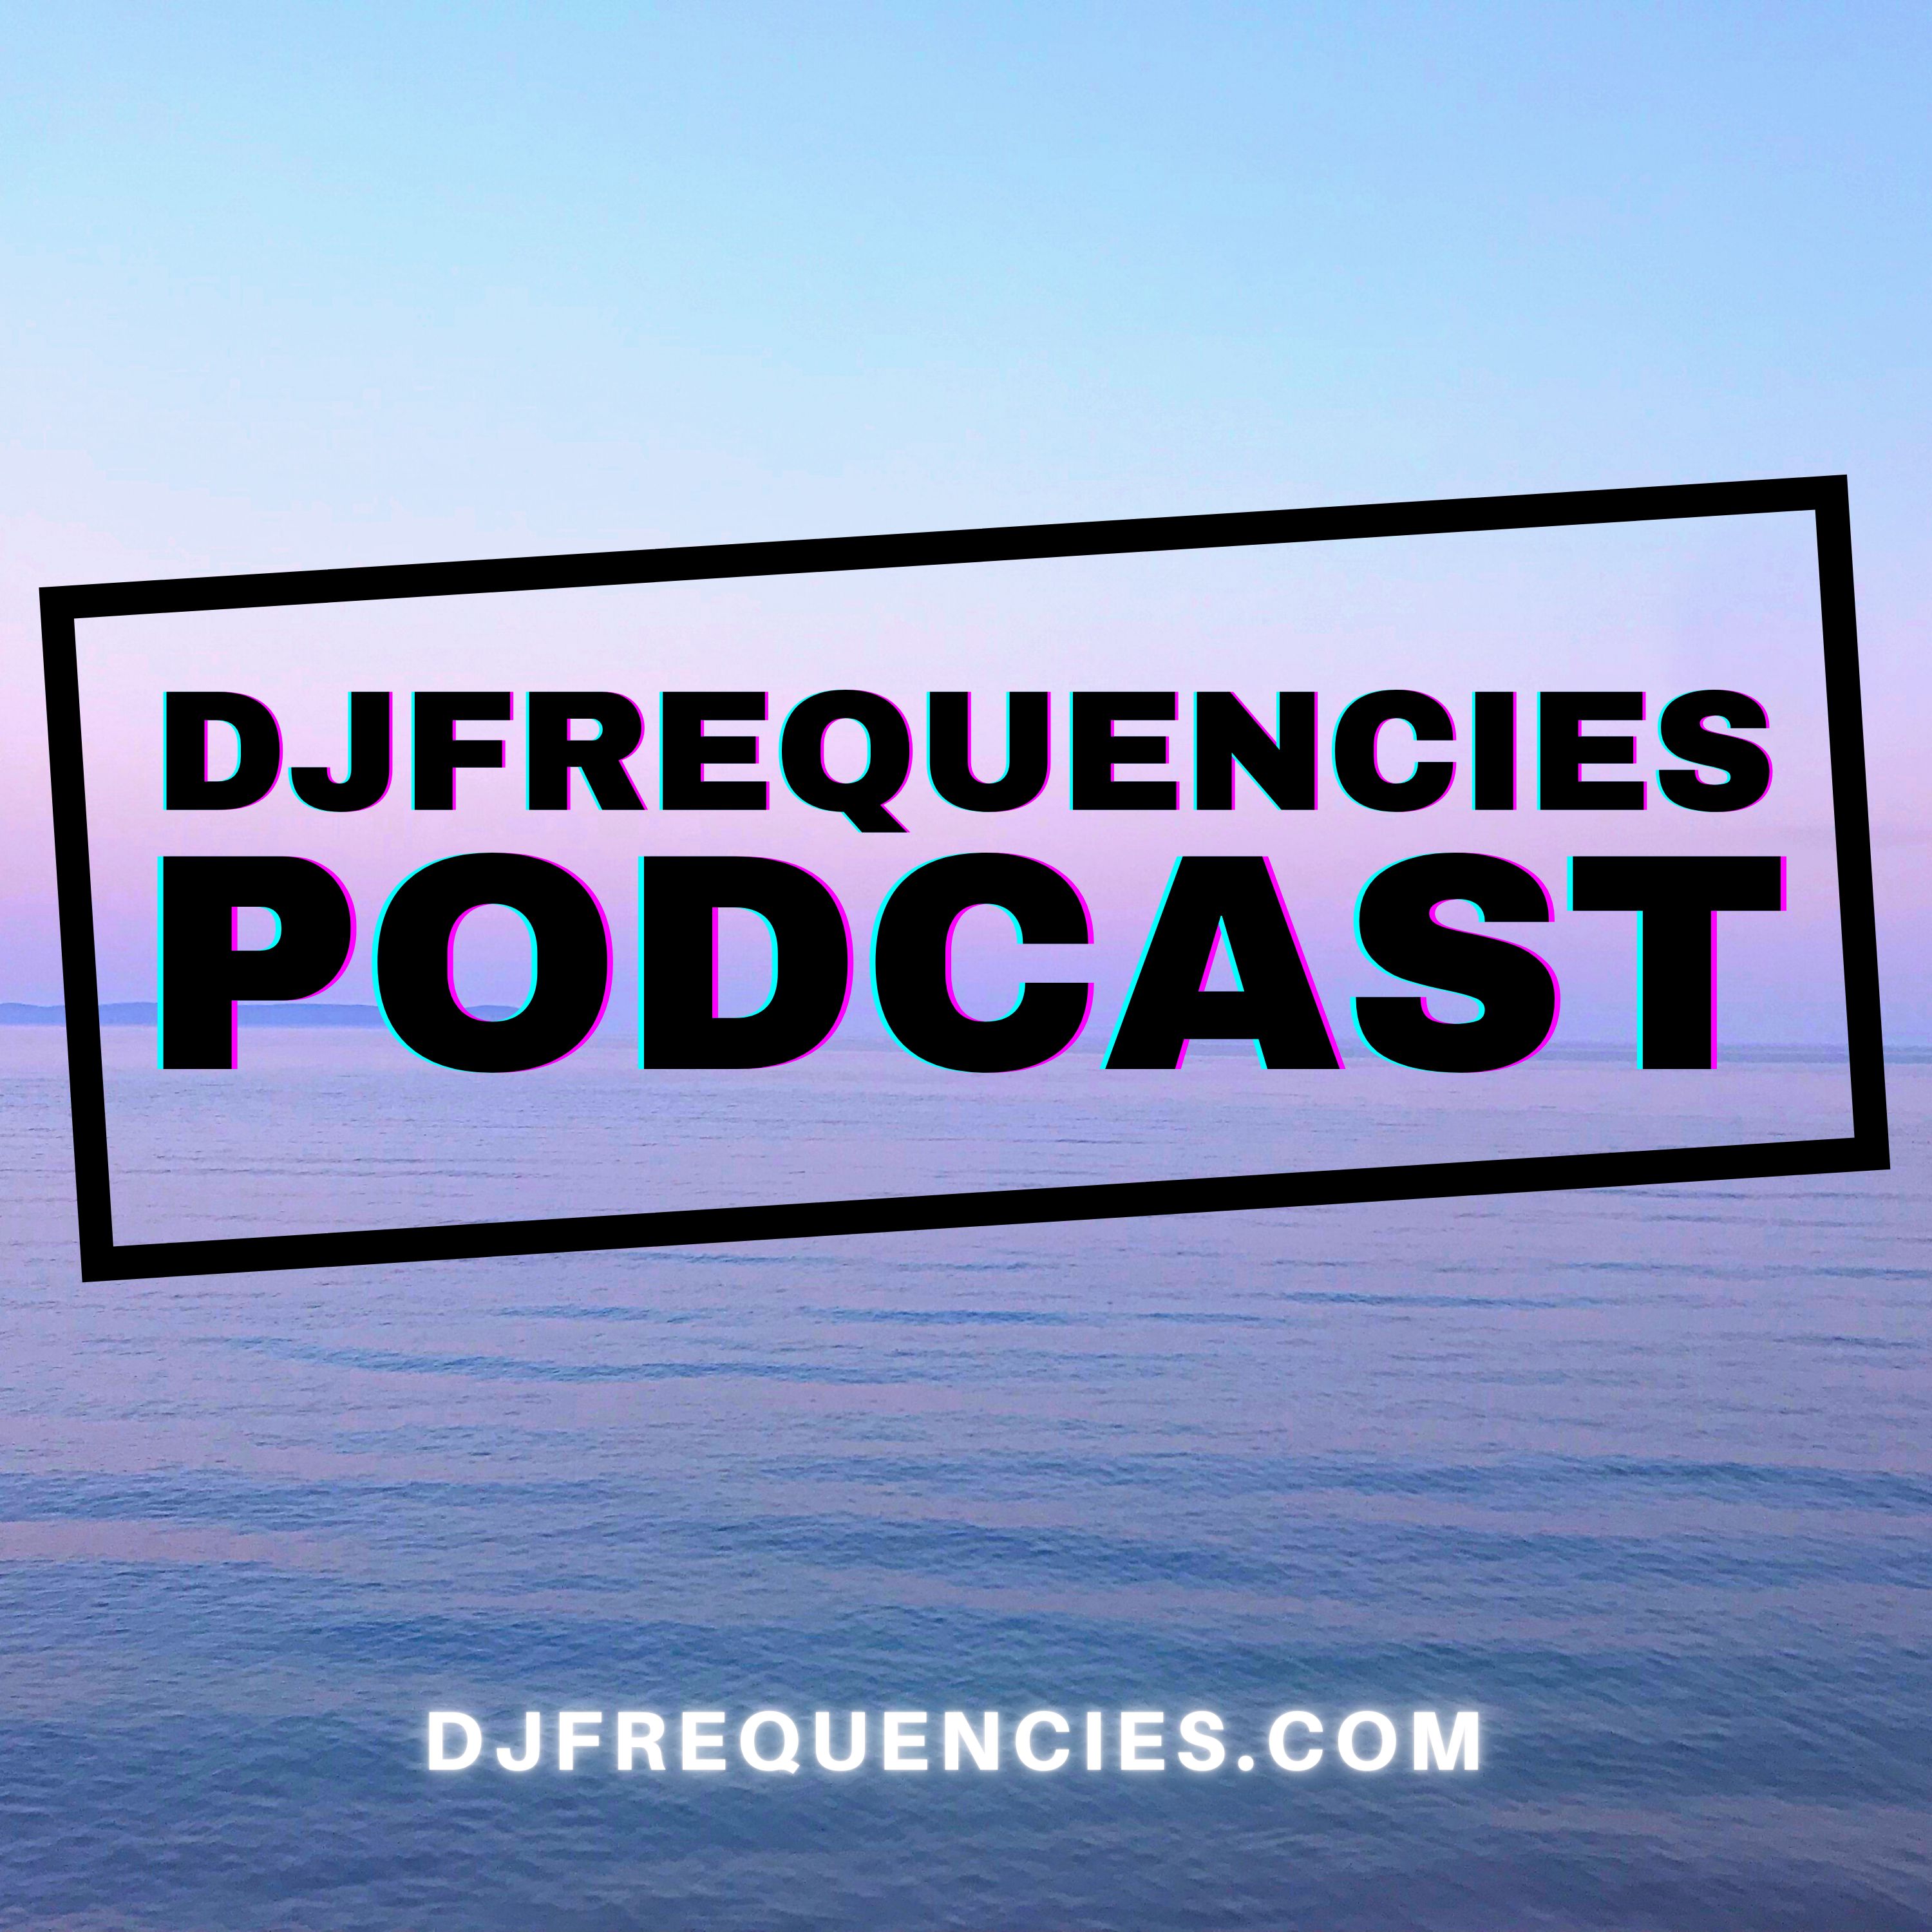 dj frequencies podcast